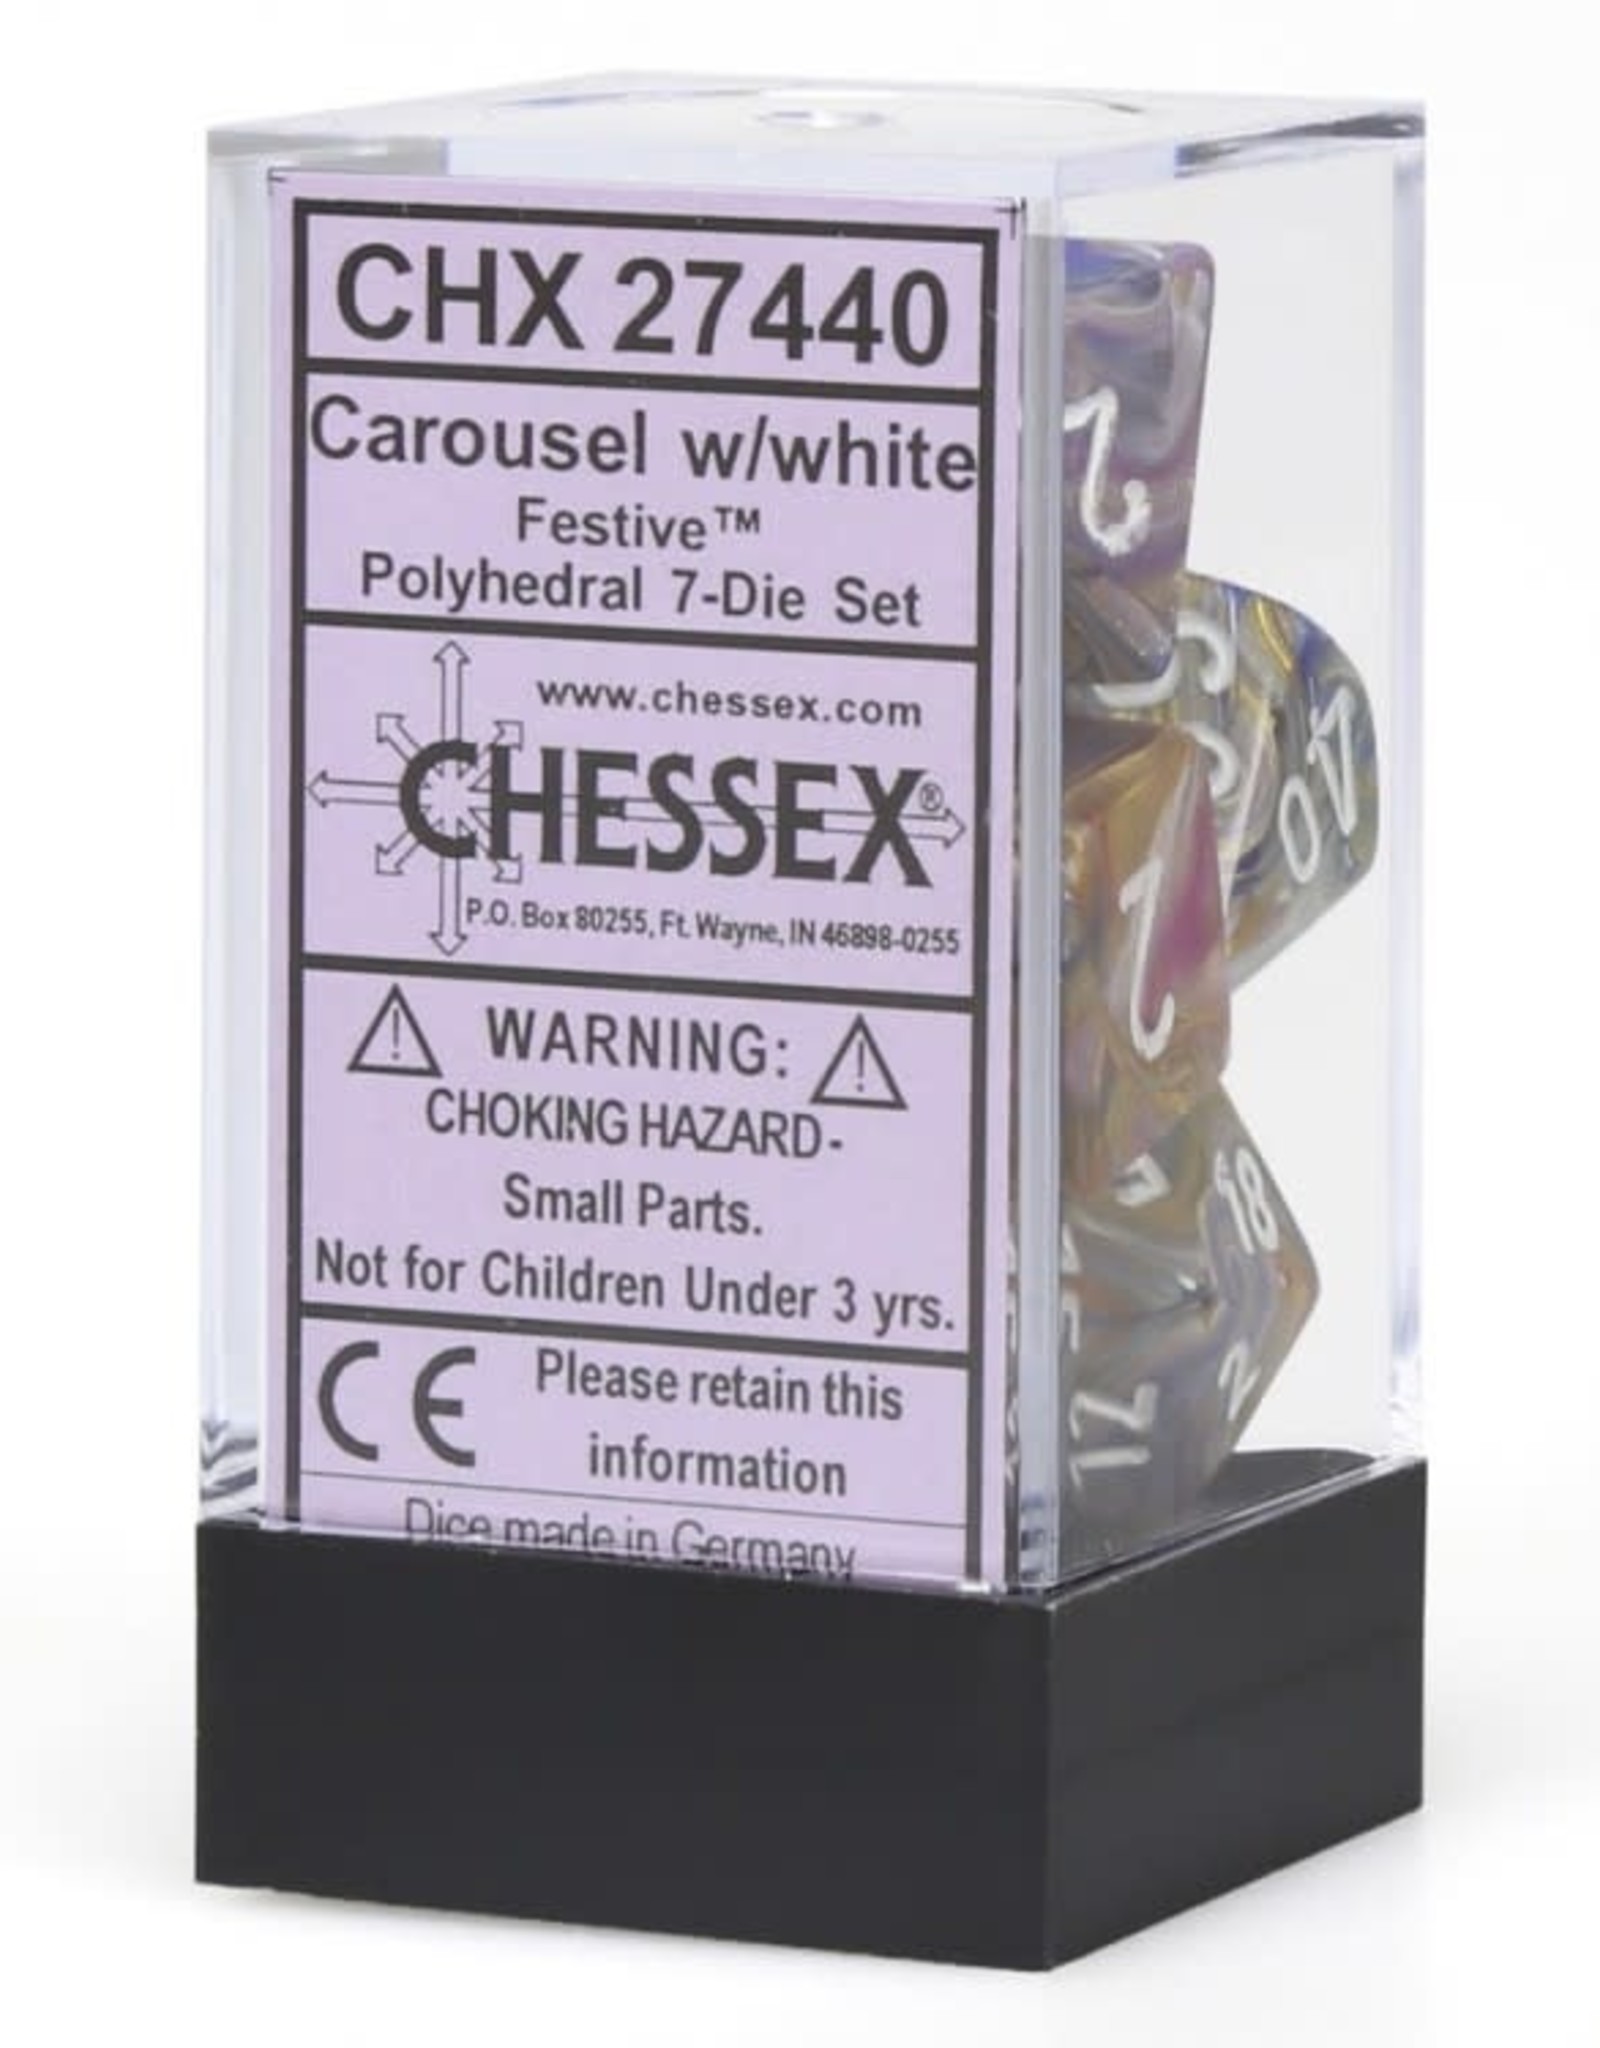 Chessex CHX Festive Dice: Carousel/White Poly 7-Die Set 27440